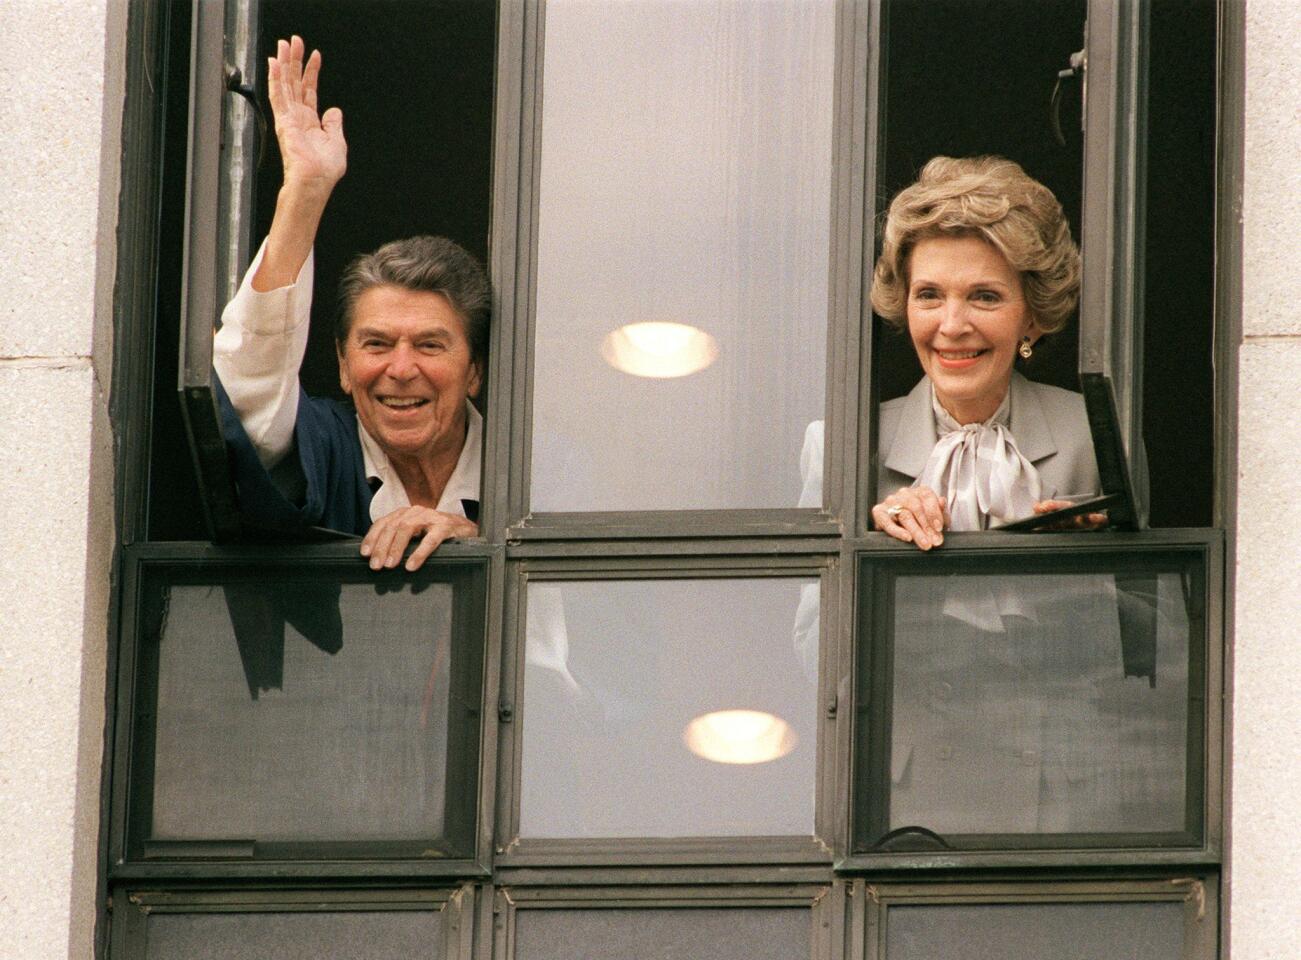 Ronald Reagan recovers